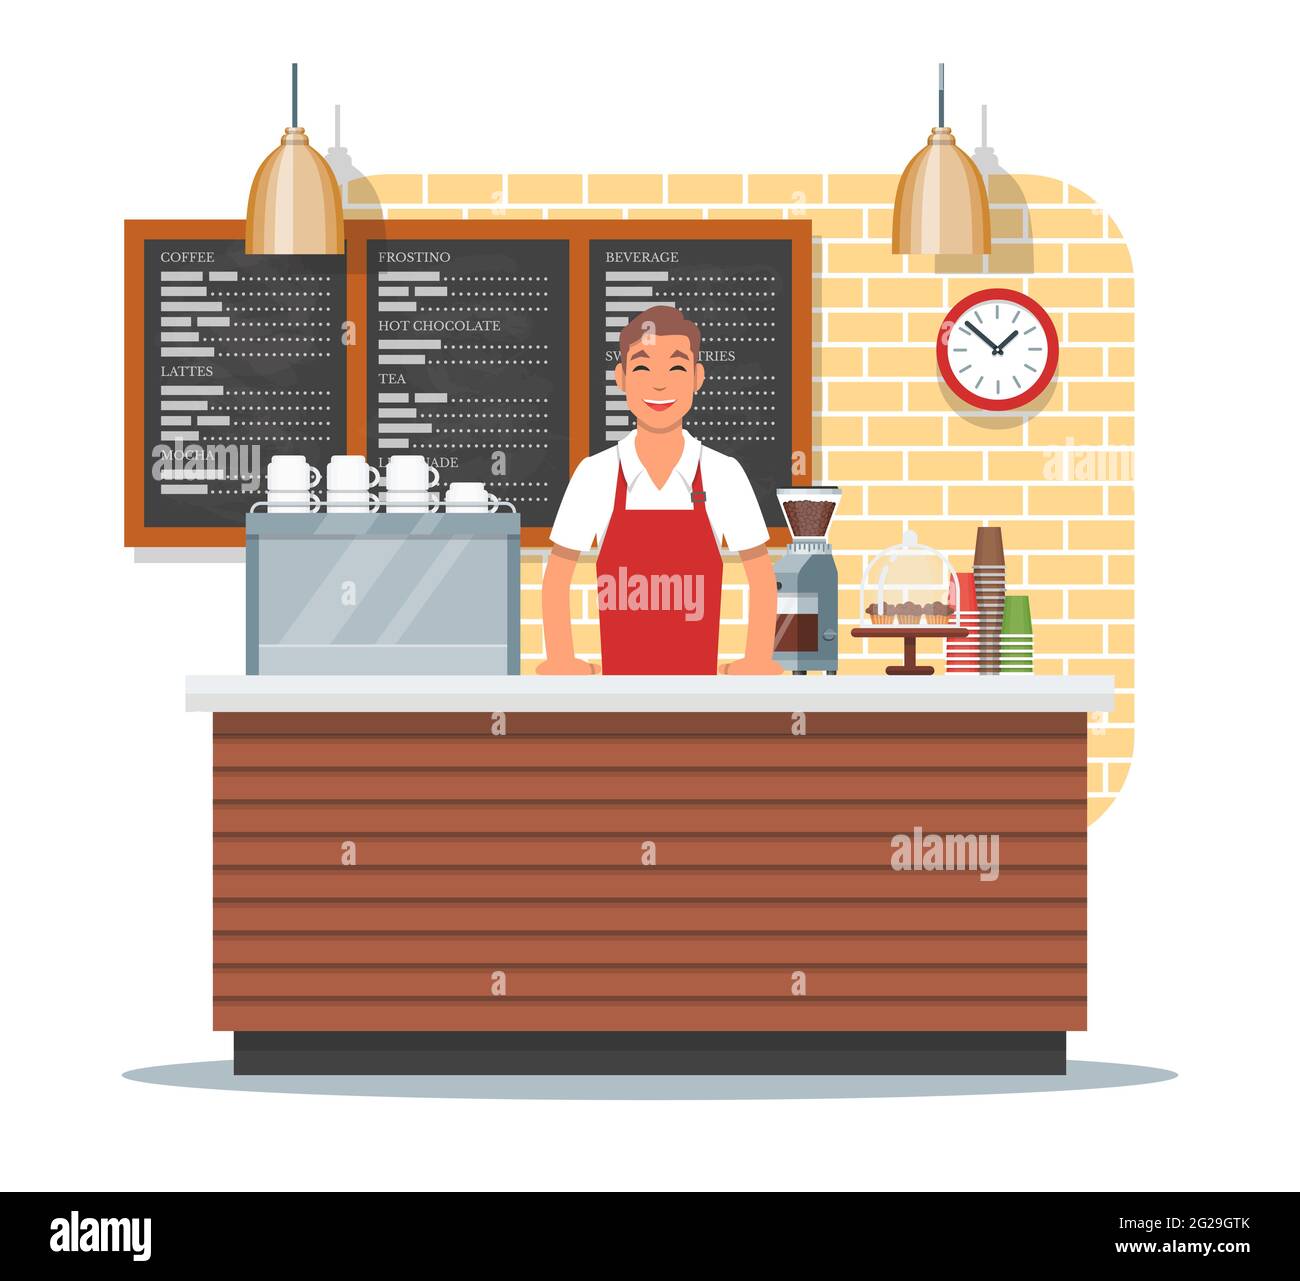 Vektor-Illustration des Coffee-Shop-Designs mit flachem Barista-Stil Stock Vektor